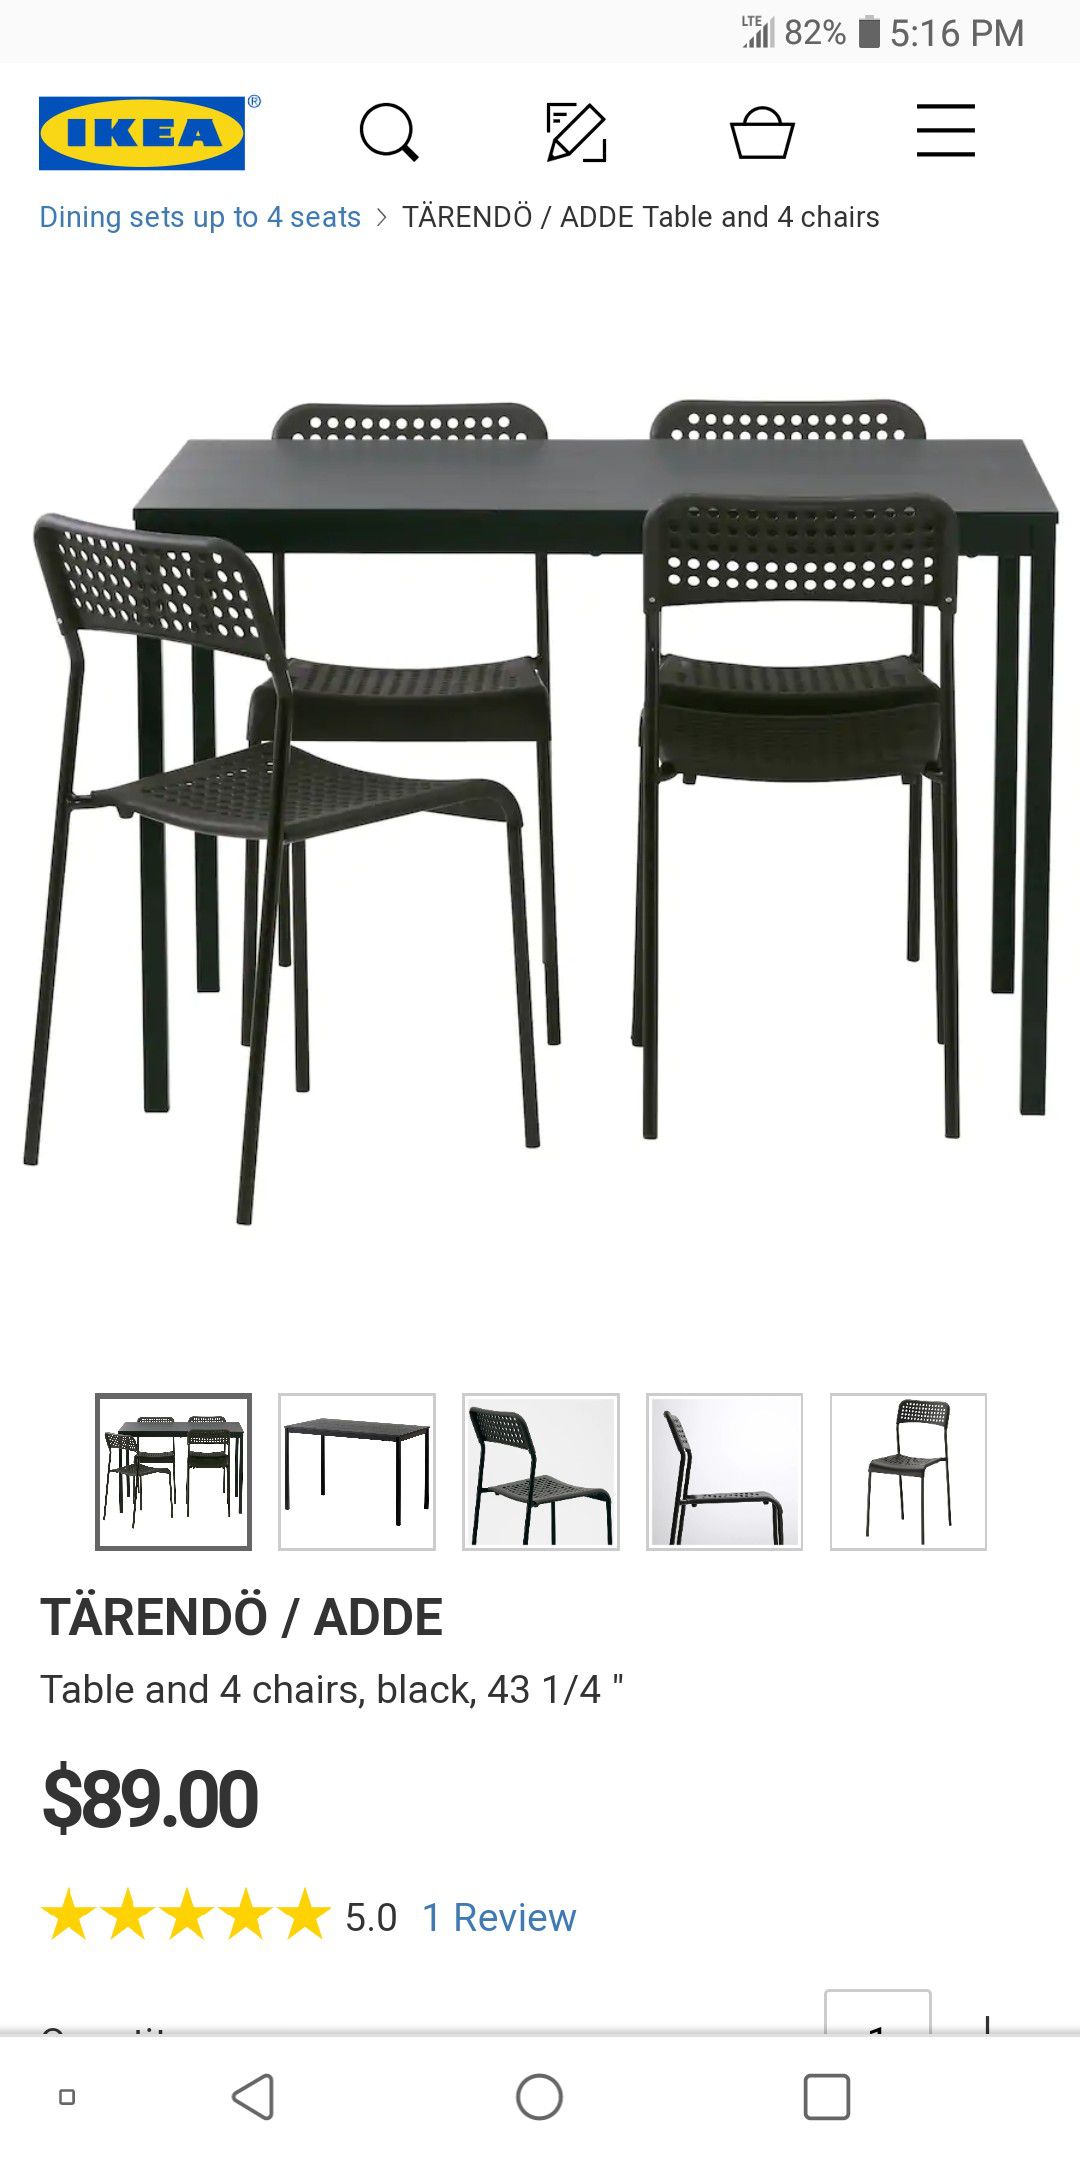 IKEA dining table set